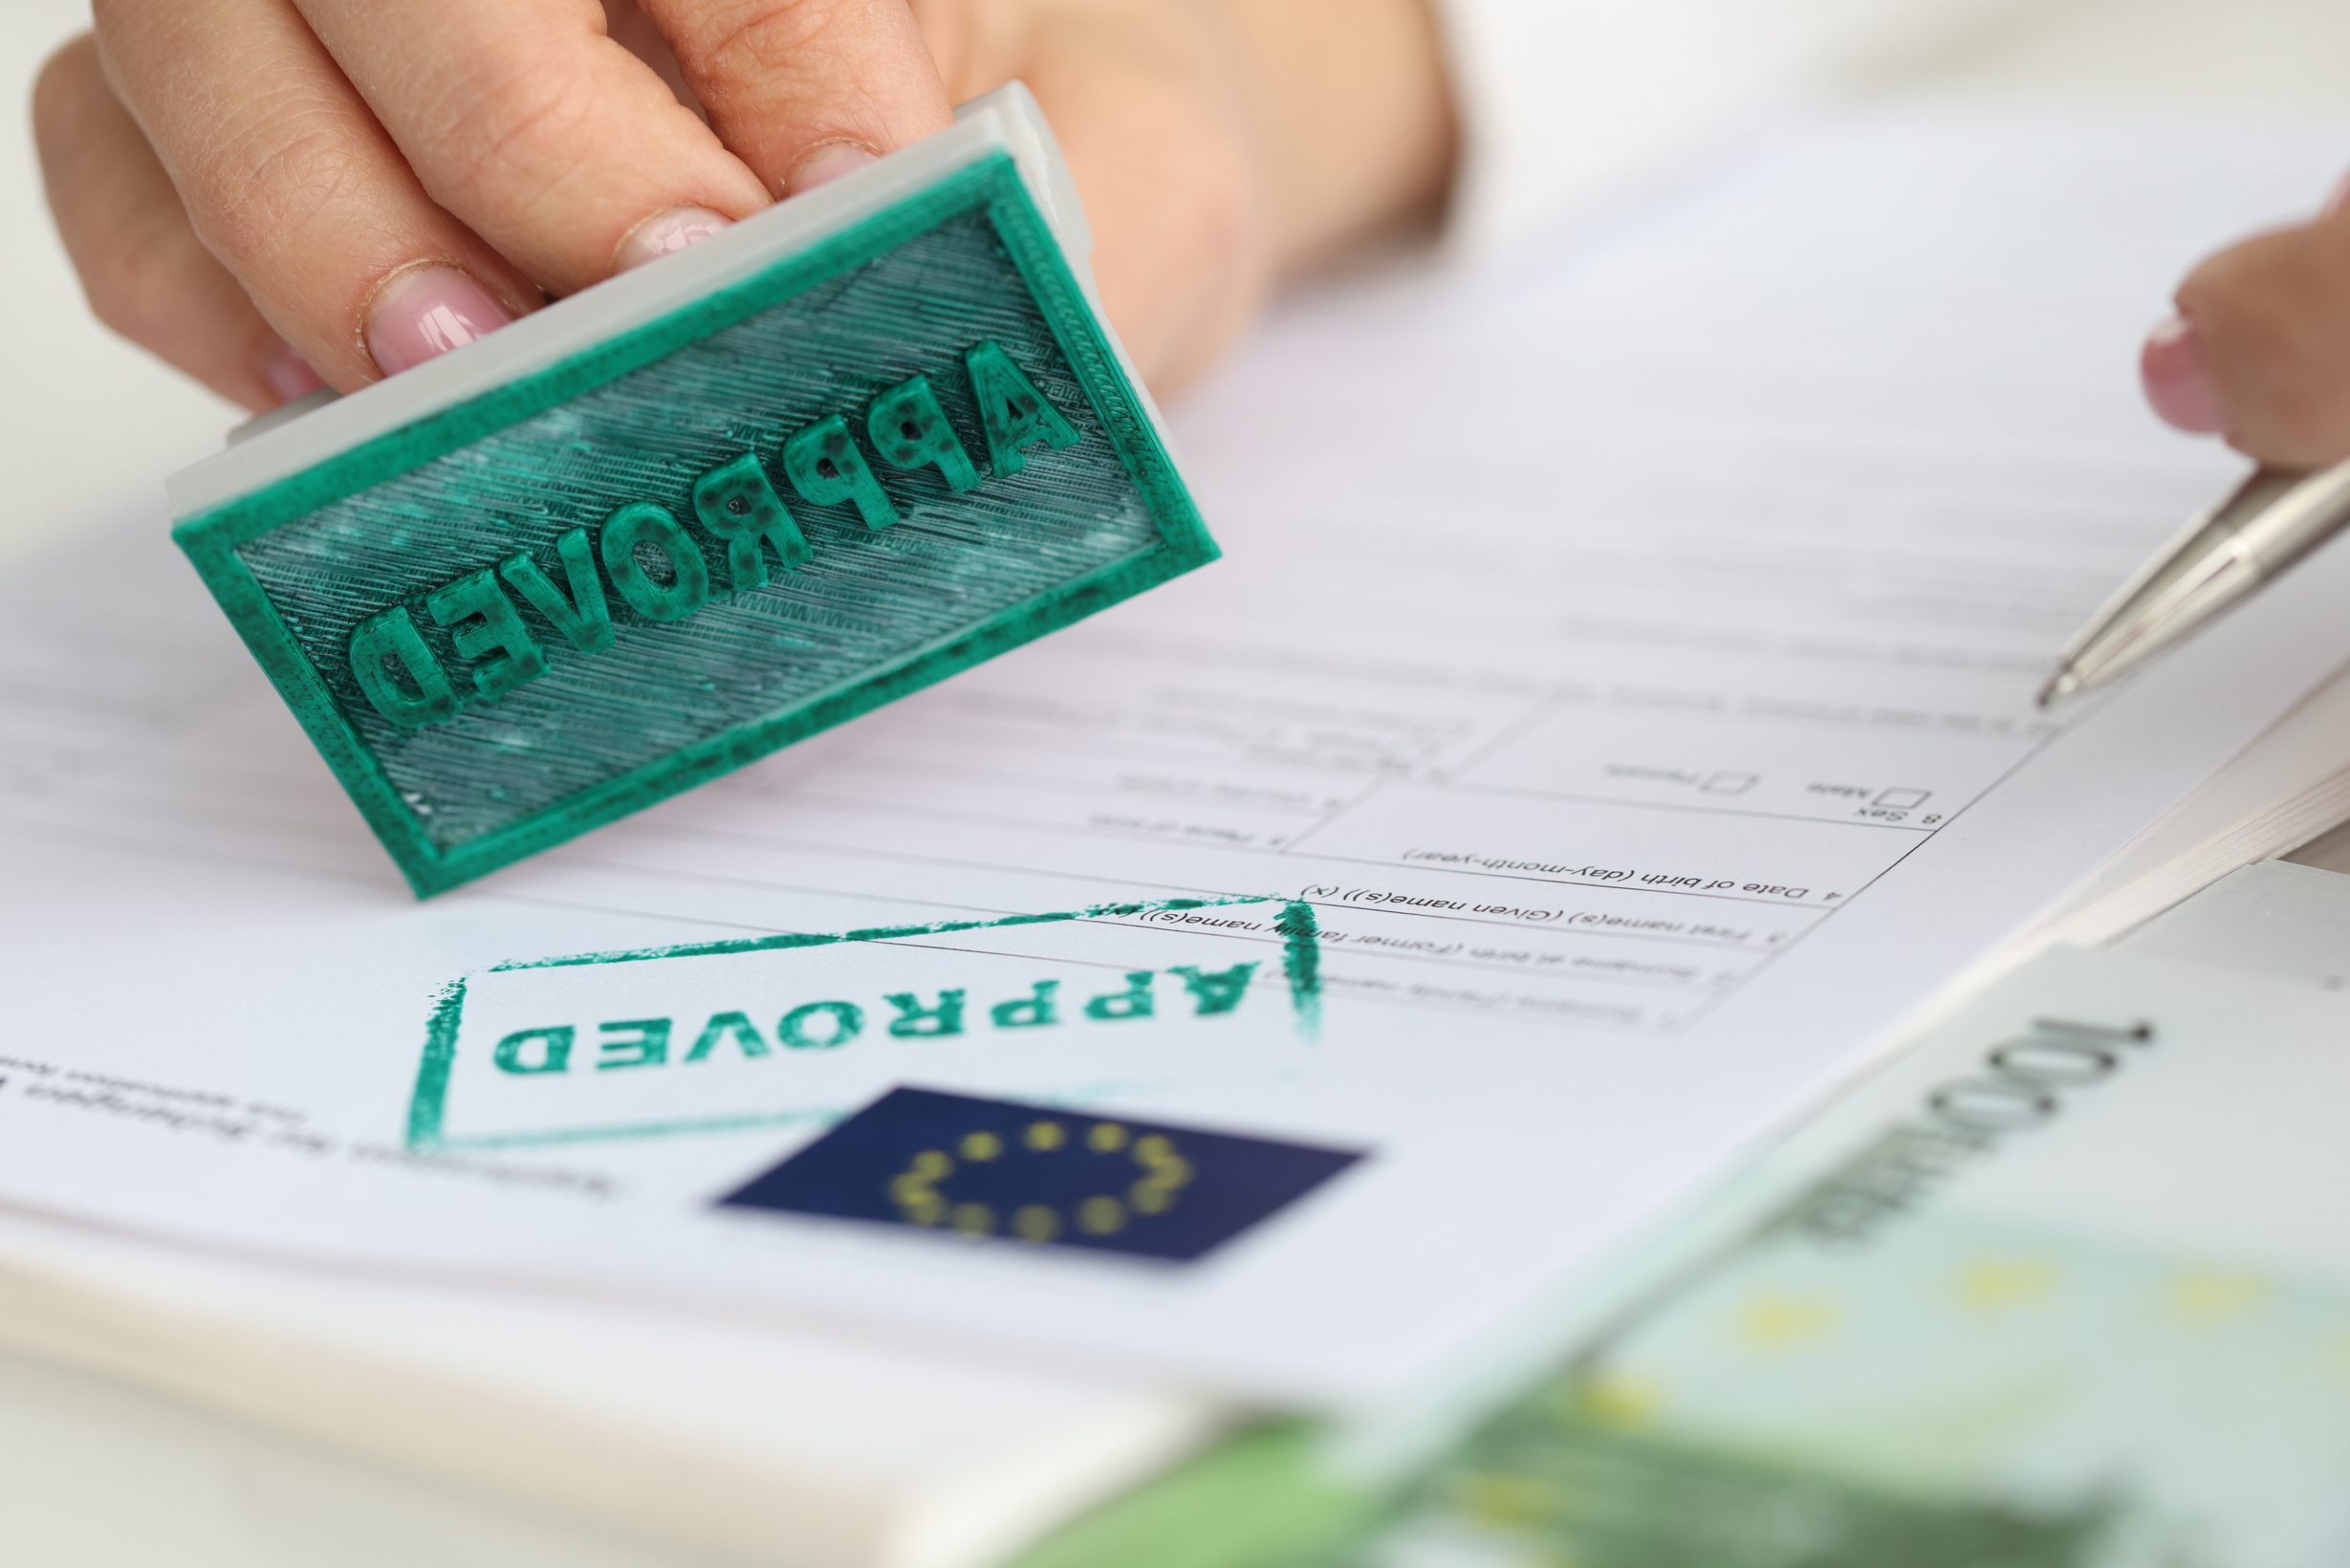 EU Schengen Visa Application and Stamp Approved Document